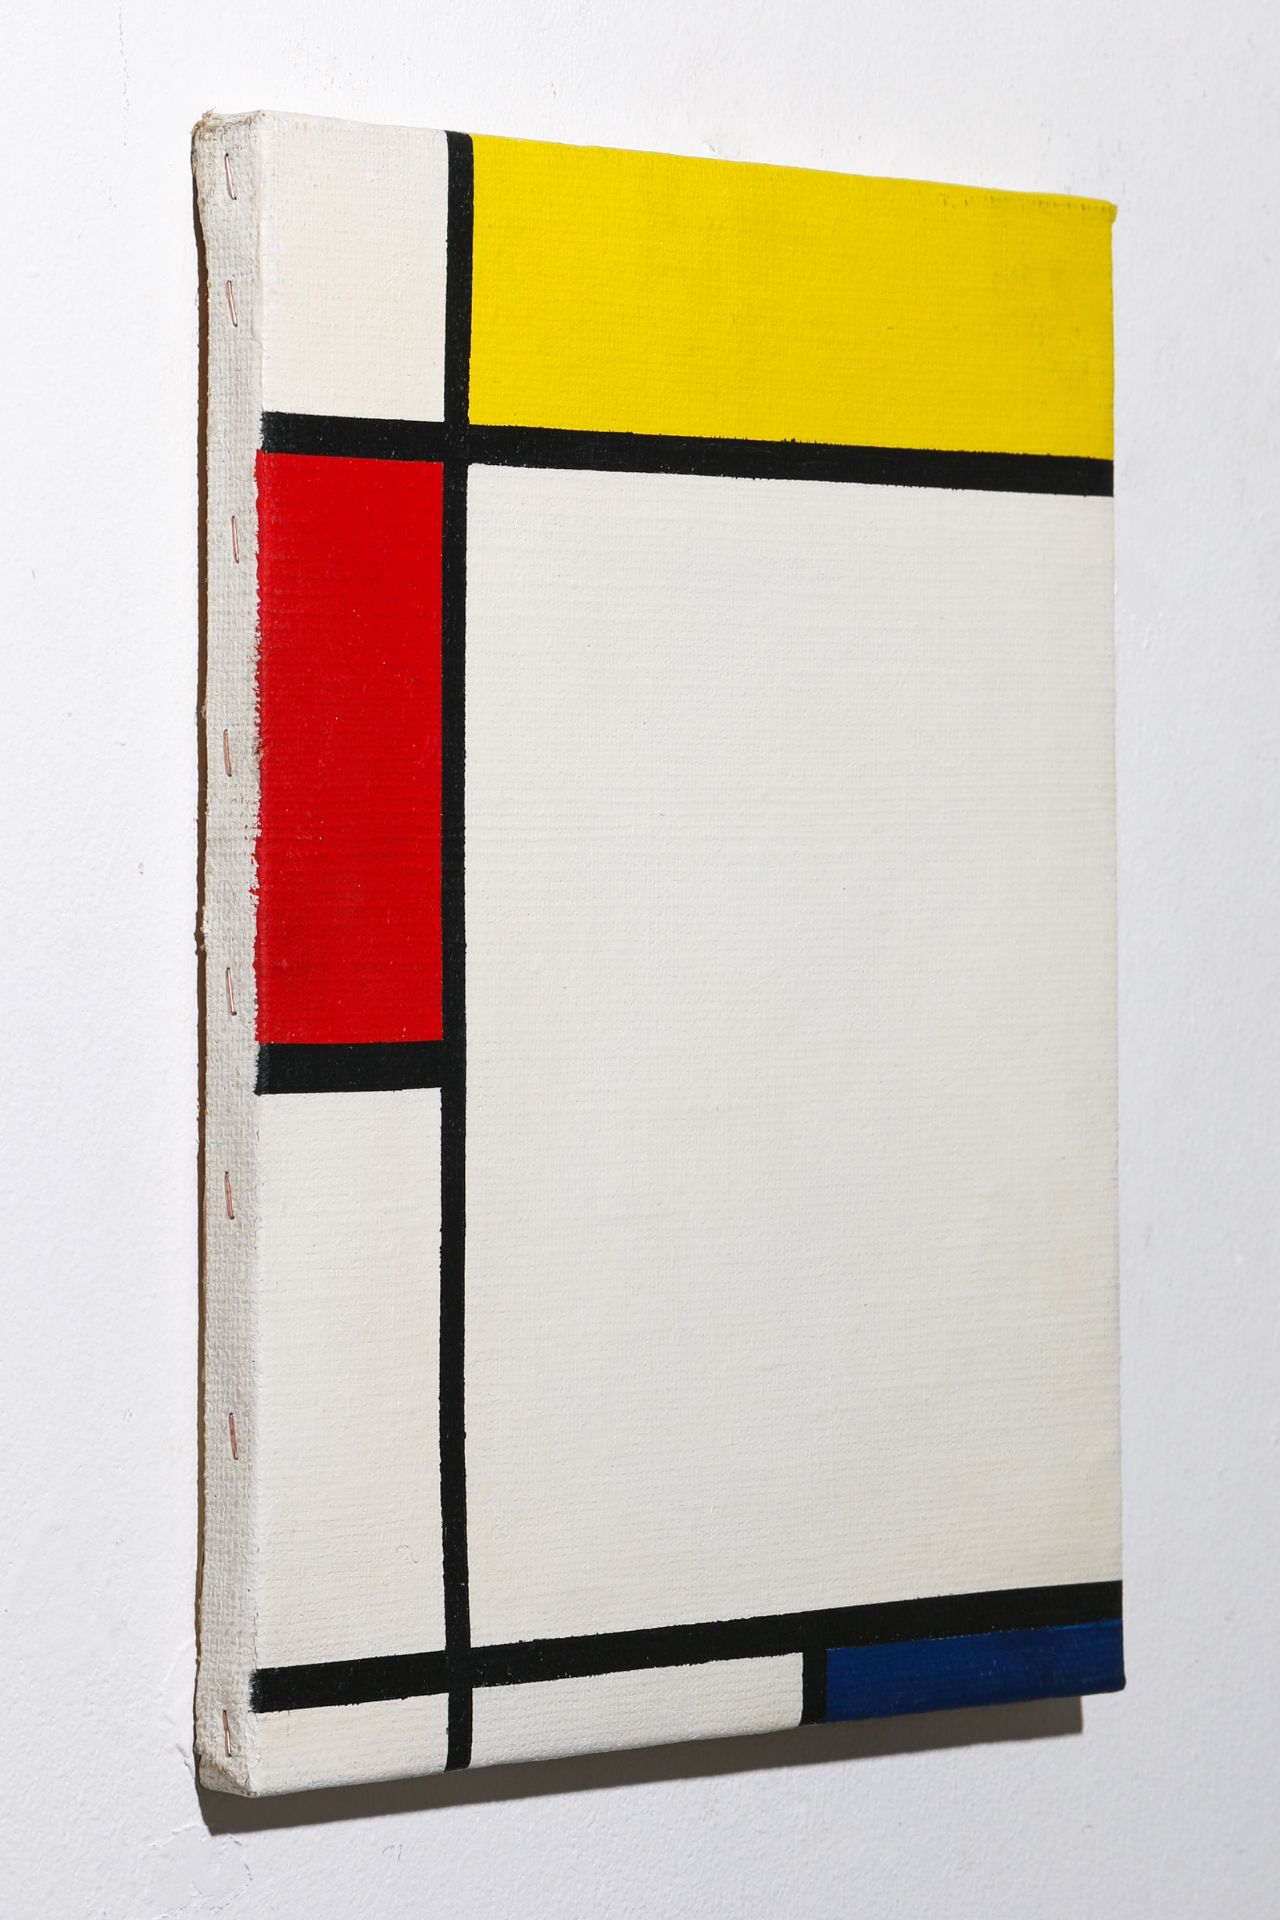 Andrea Branzi*, Studio Alchymia / Alchimia, Mondrian aus der bau. haus art collection Edition 3/10